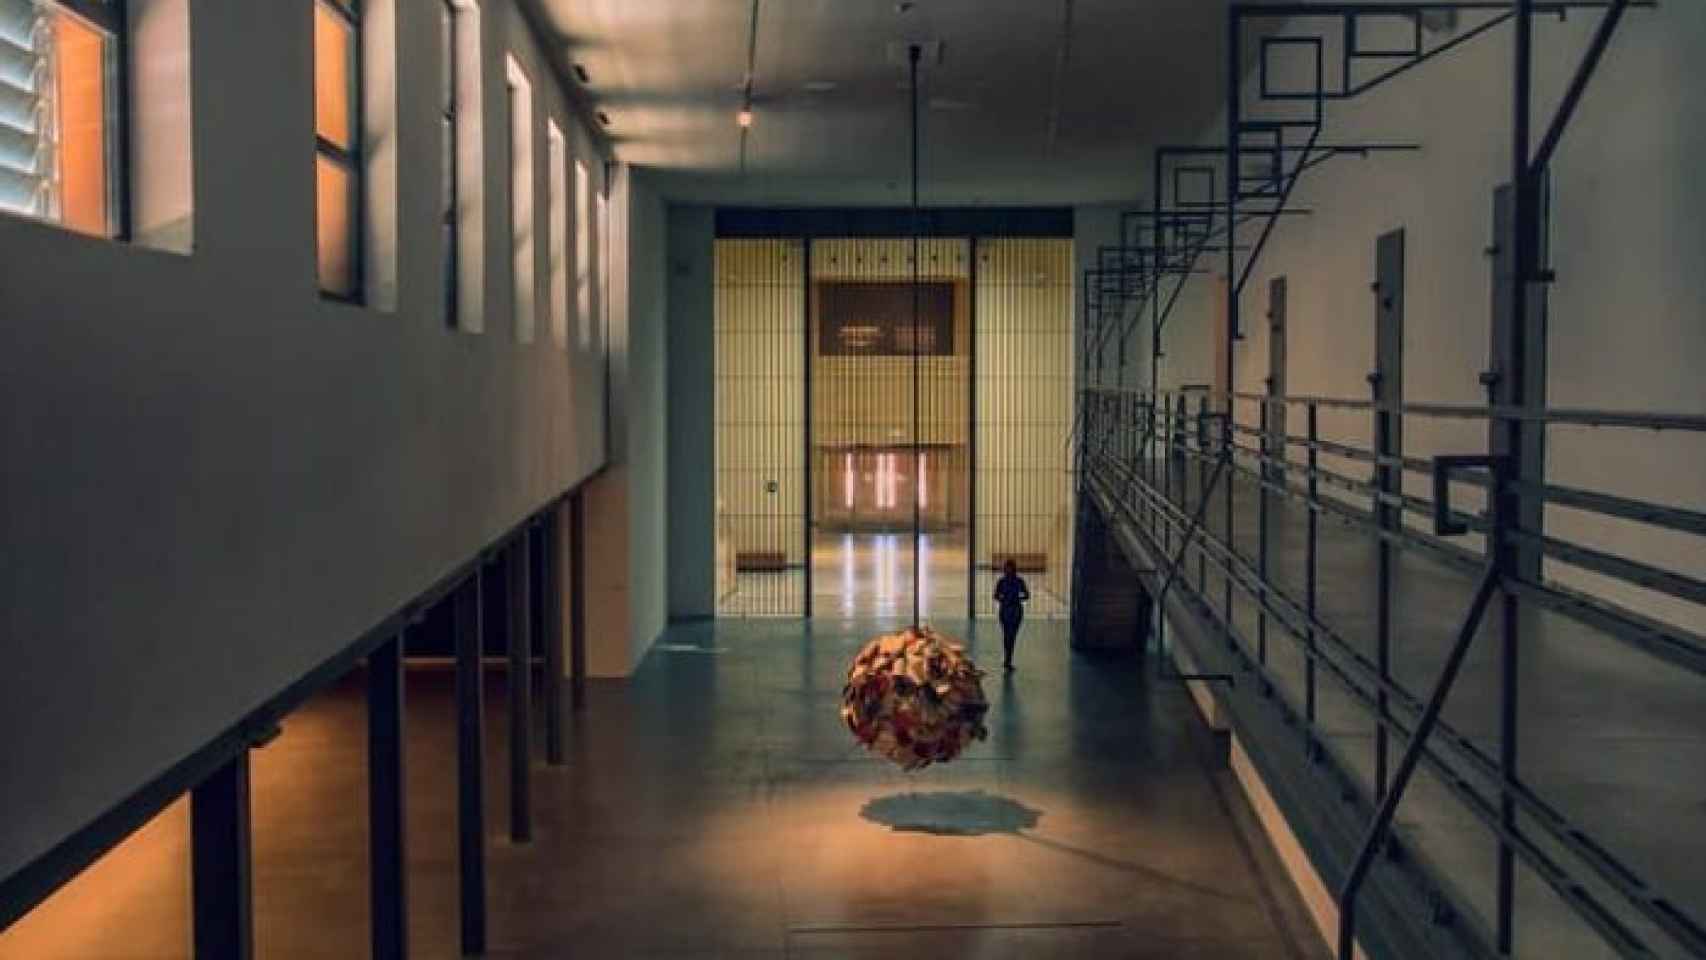 El Centro de Arte Contemporáneo de Salamanca DA2, de cárcel a contenedor cultural